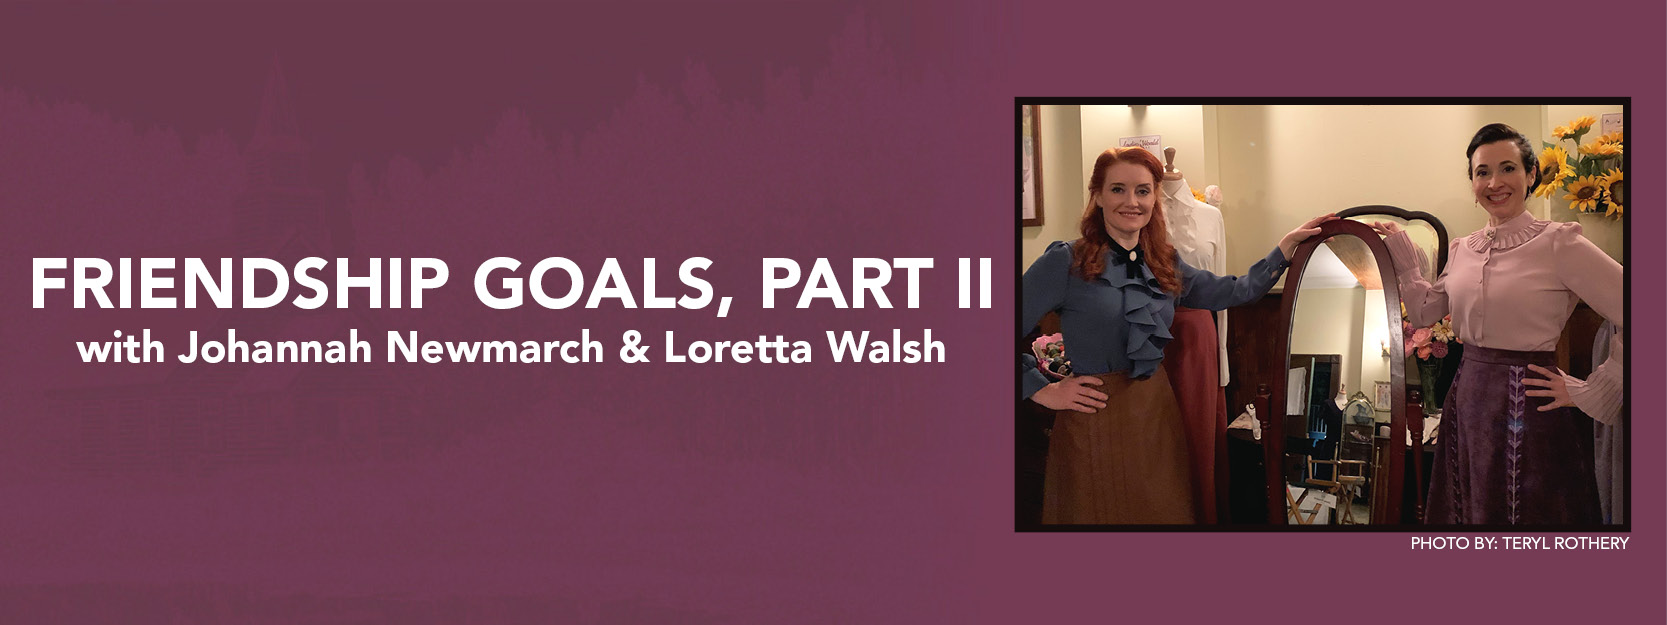 Friendship Goals with Johannah Newmarch & Loretta Walsh, Part II 